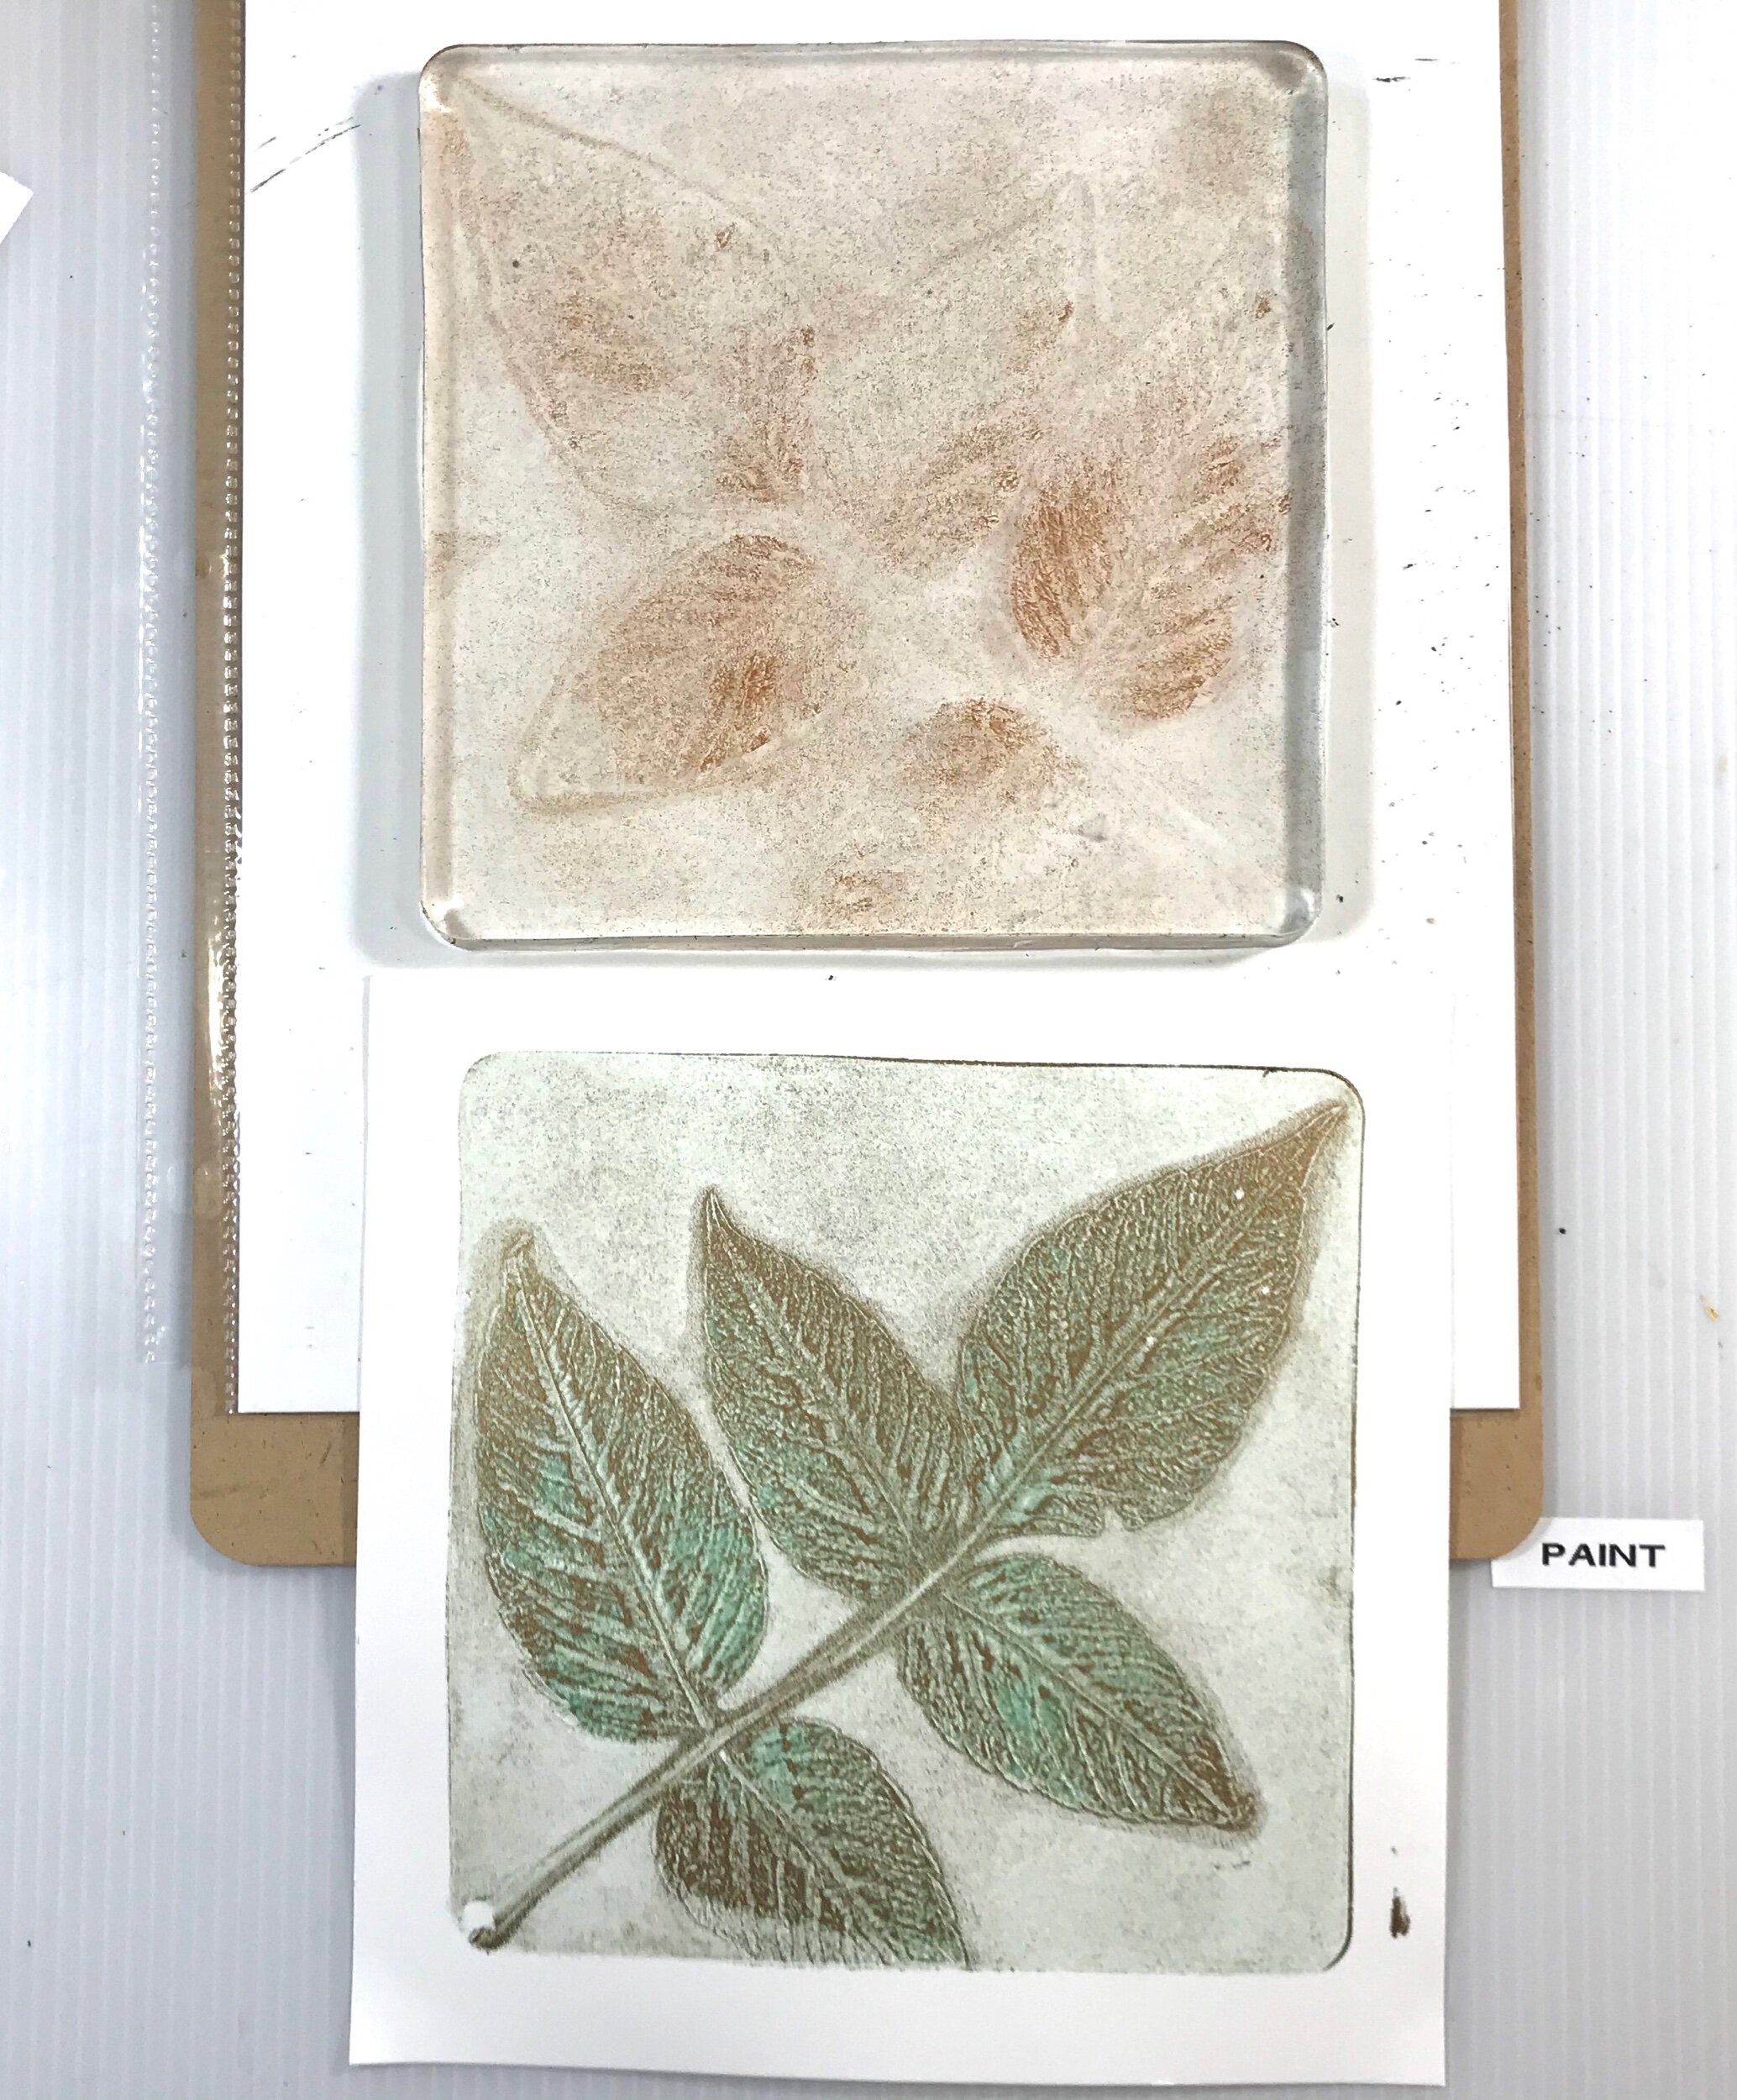 Iridescent Bronze: Gel Plate Printing with Botanicals — Lee Monts Original  Art